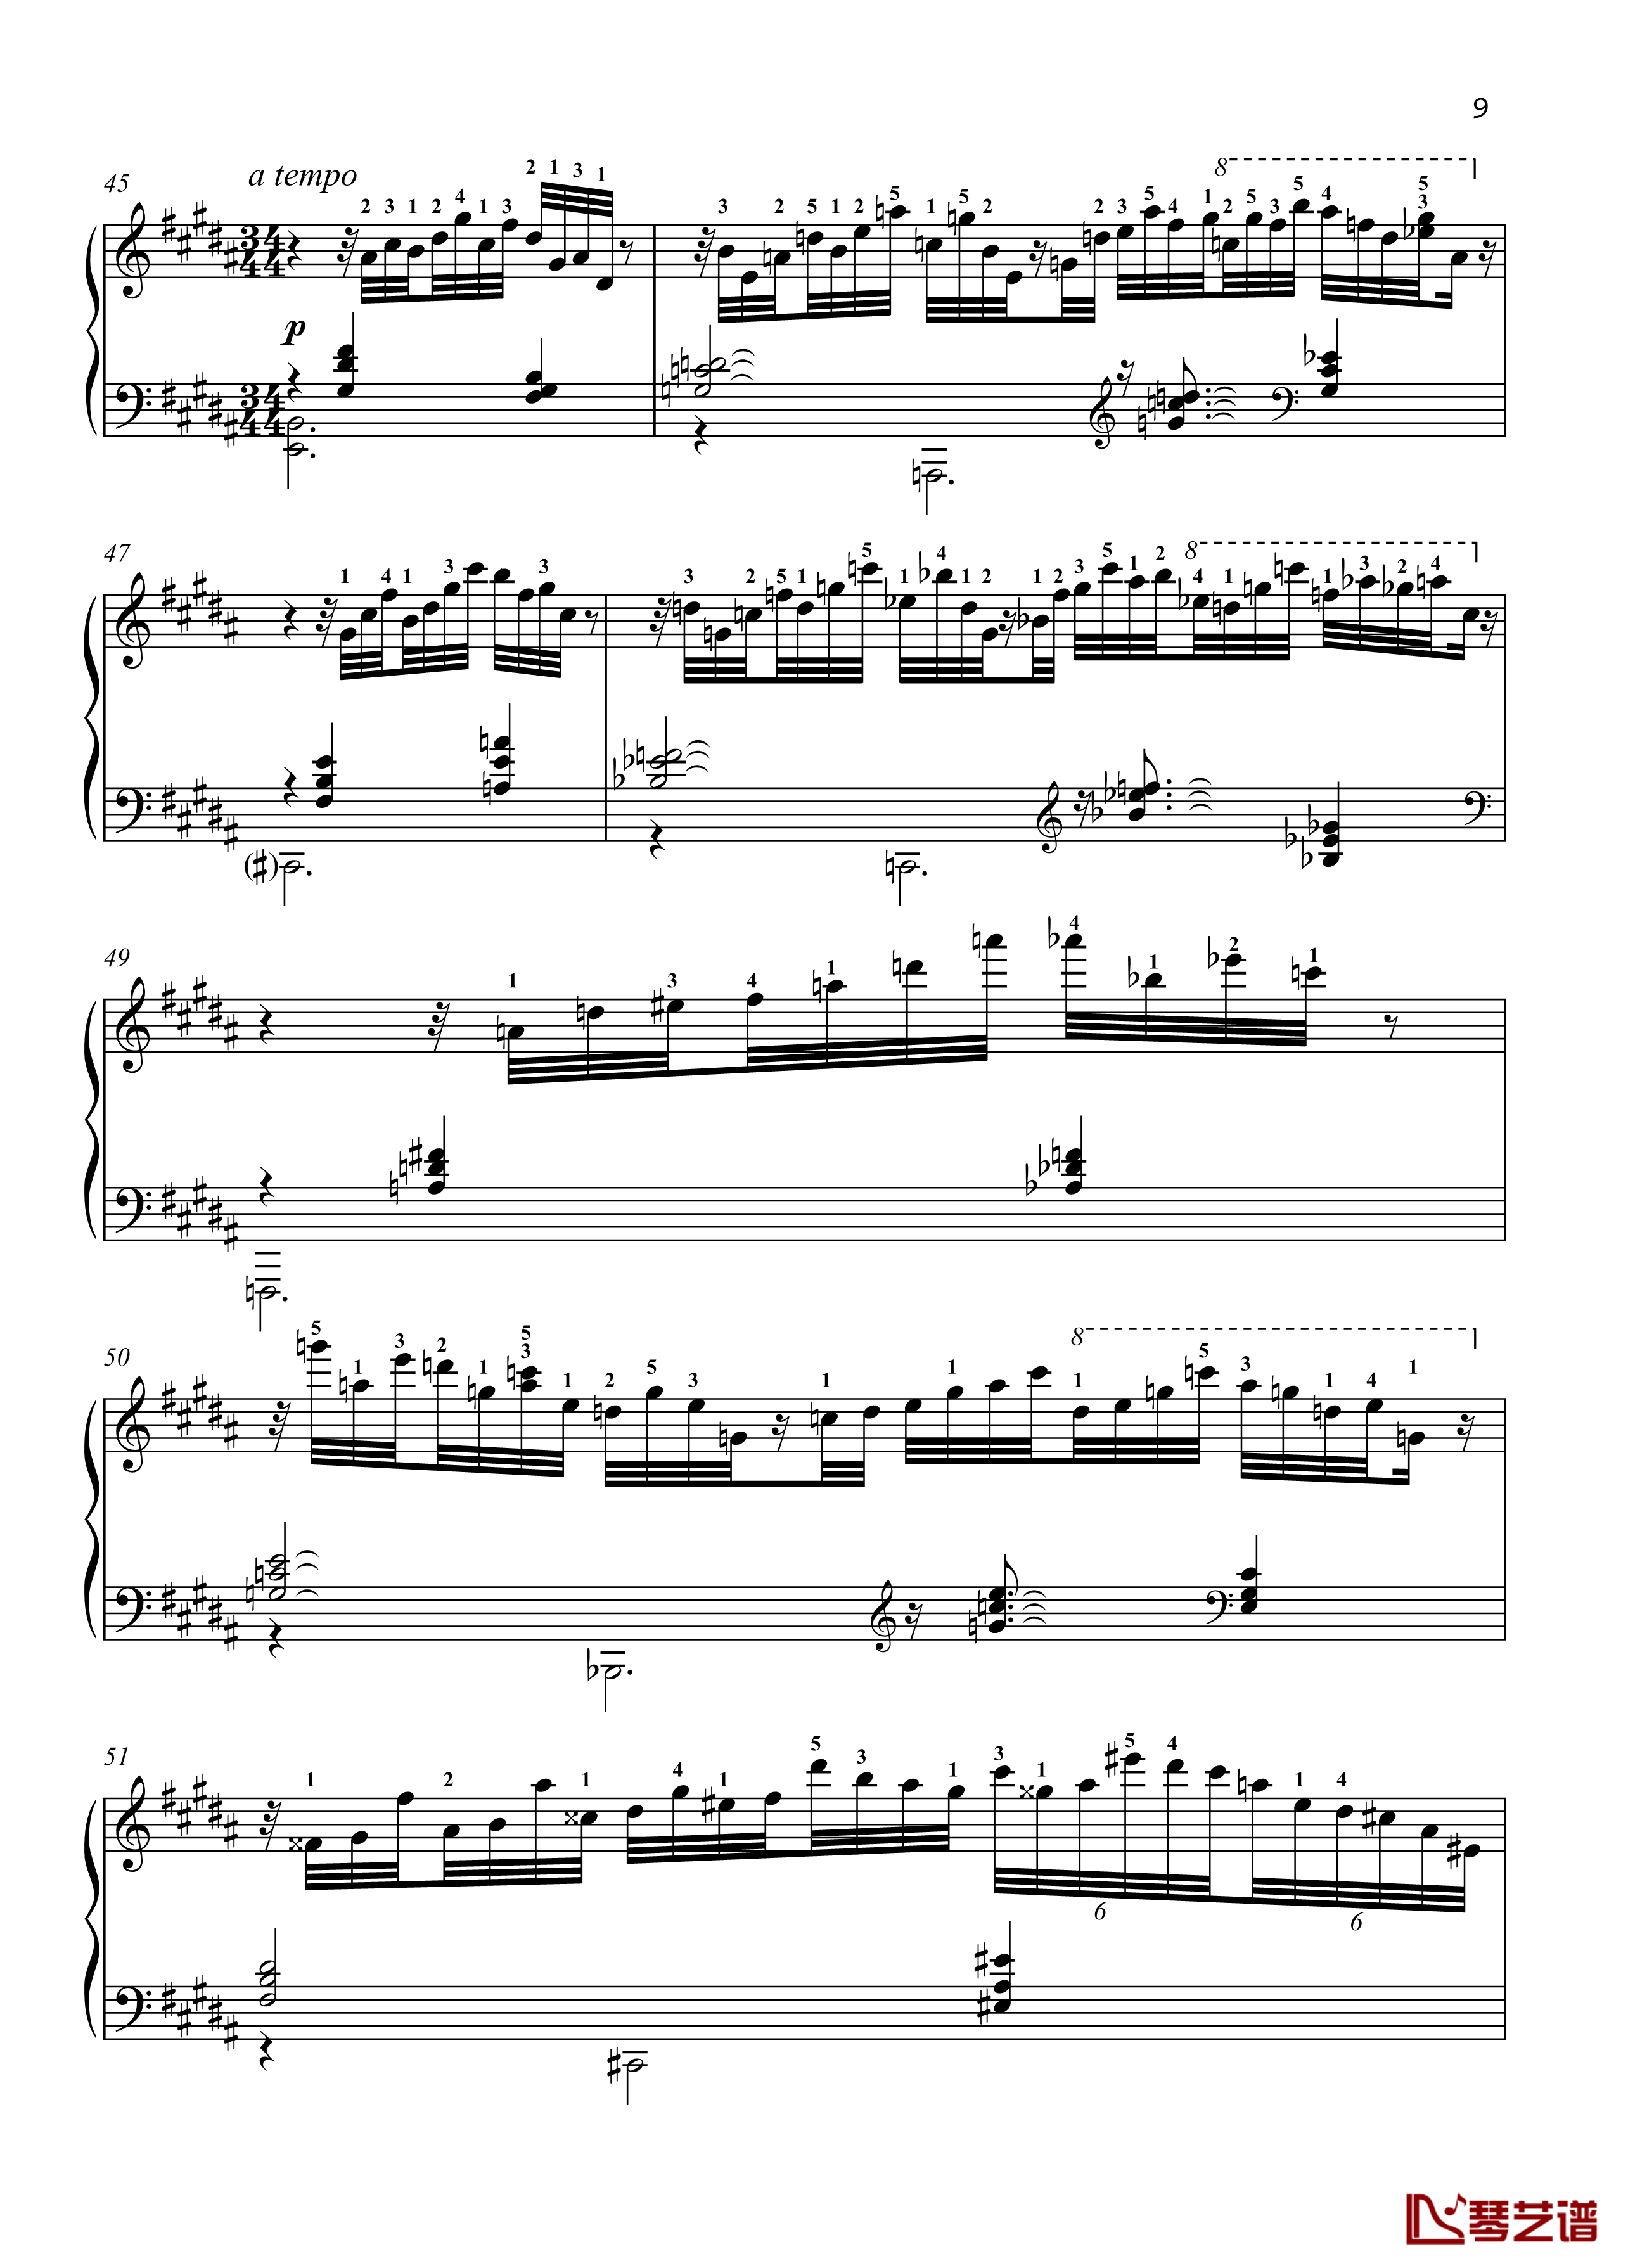 No. 4. Reminiscence钢琴谱-带指法-八首音乐会练习曲  Eight Concert ?tudes Op 40 - -爵士-尼古拉·凯帕斯汀